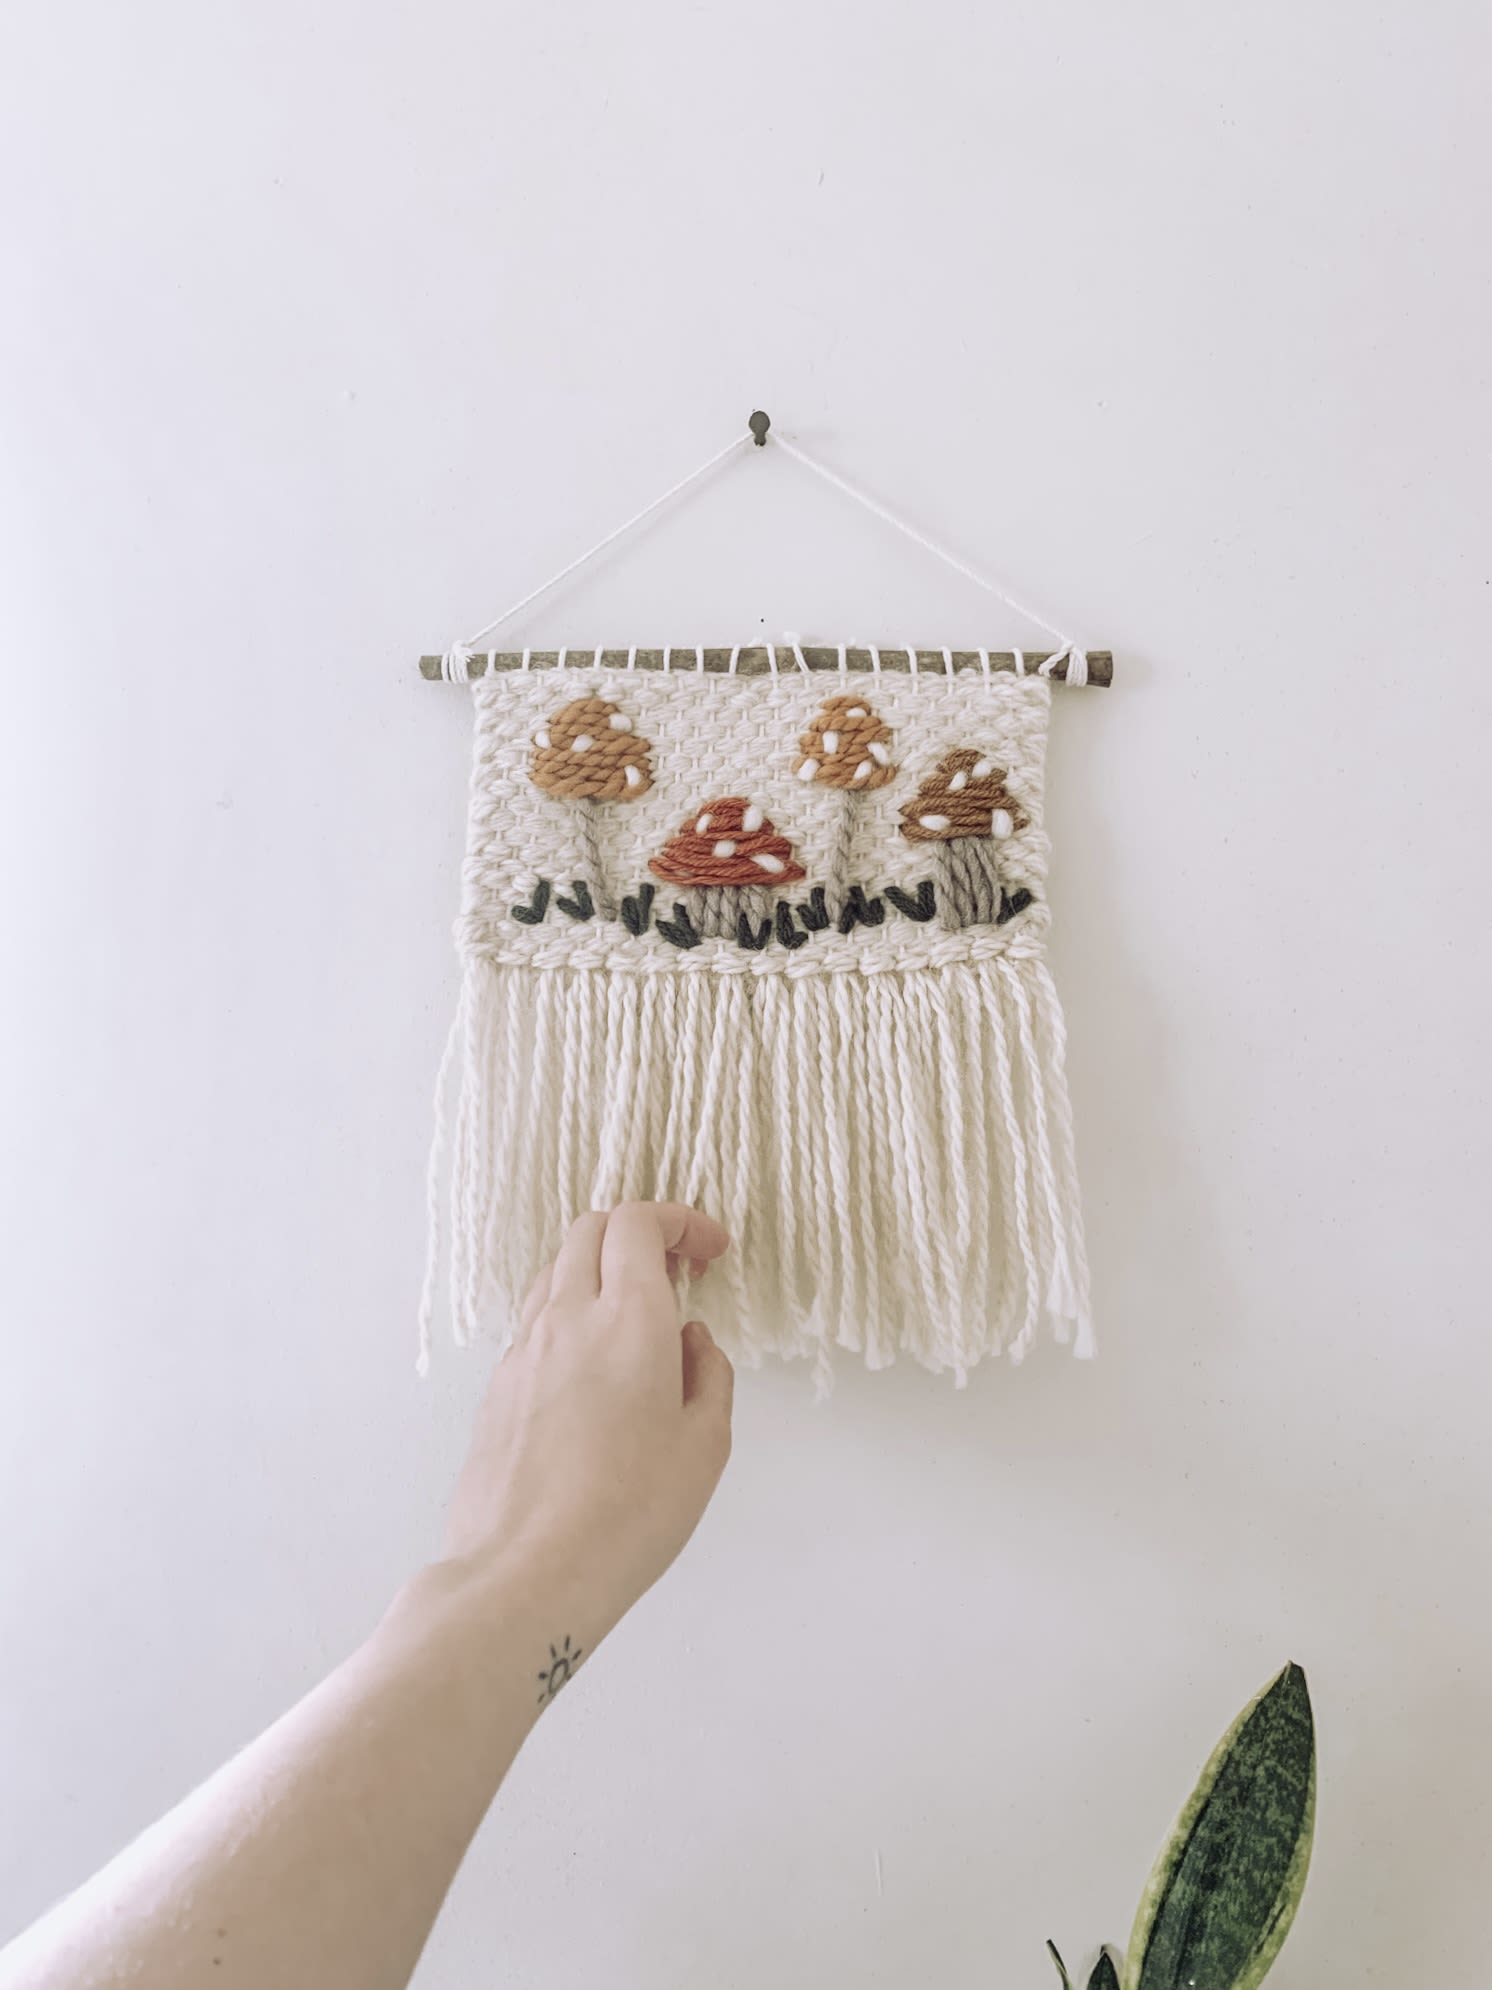 Large Handmade Textured Yarn Wall Hanging Decor - Boho Style by